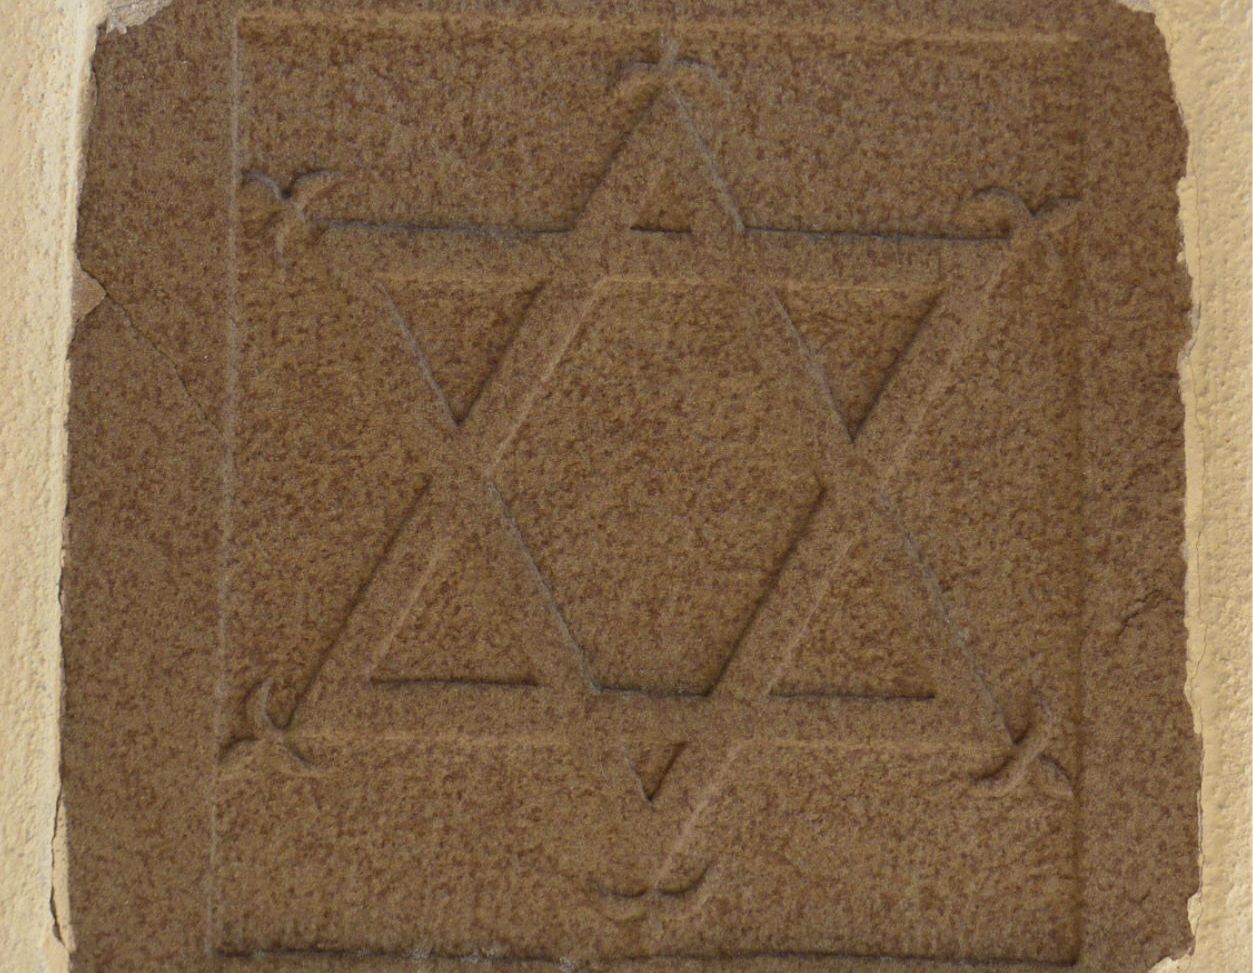 Stone plaque bearing Star of David